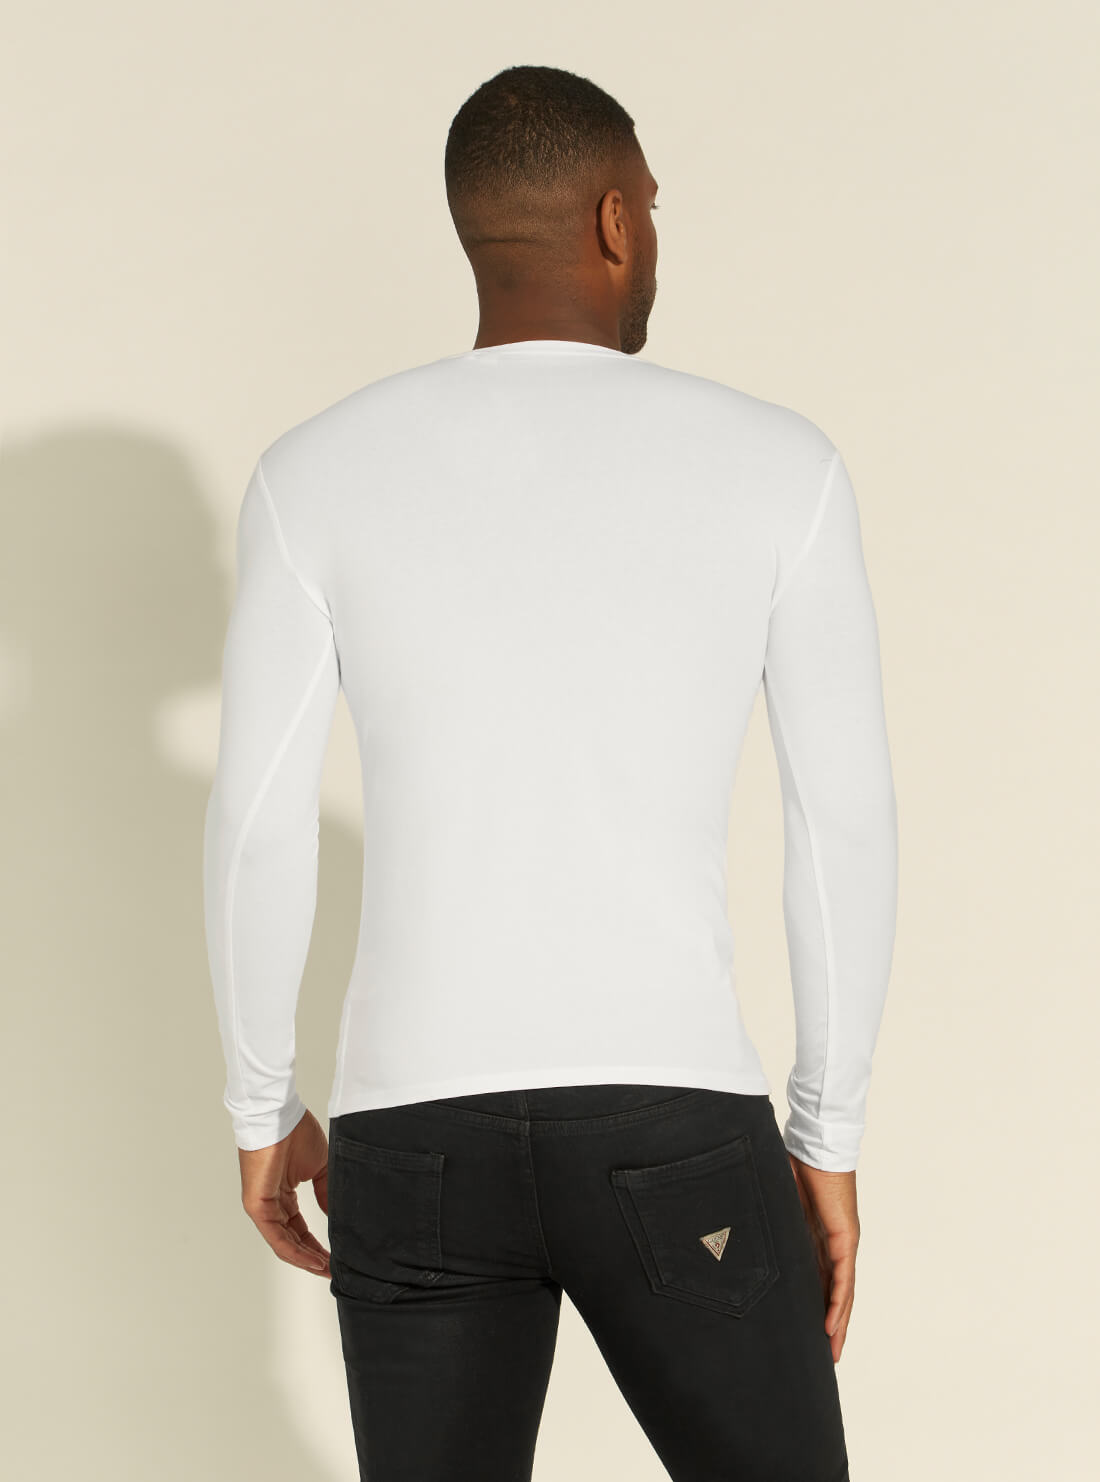 GUESS Mens White Super Slim Long Sleeve T-Shirt M1RI28J1311 Back View